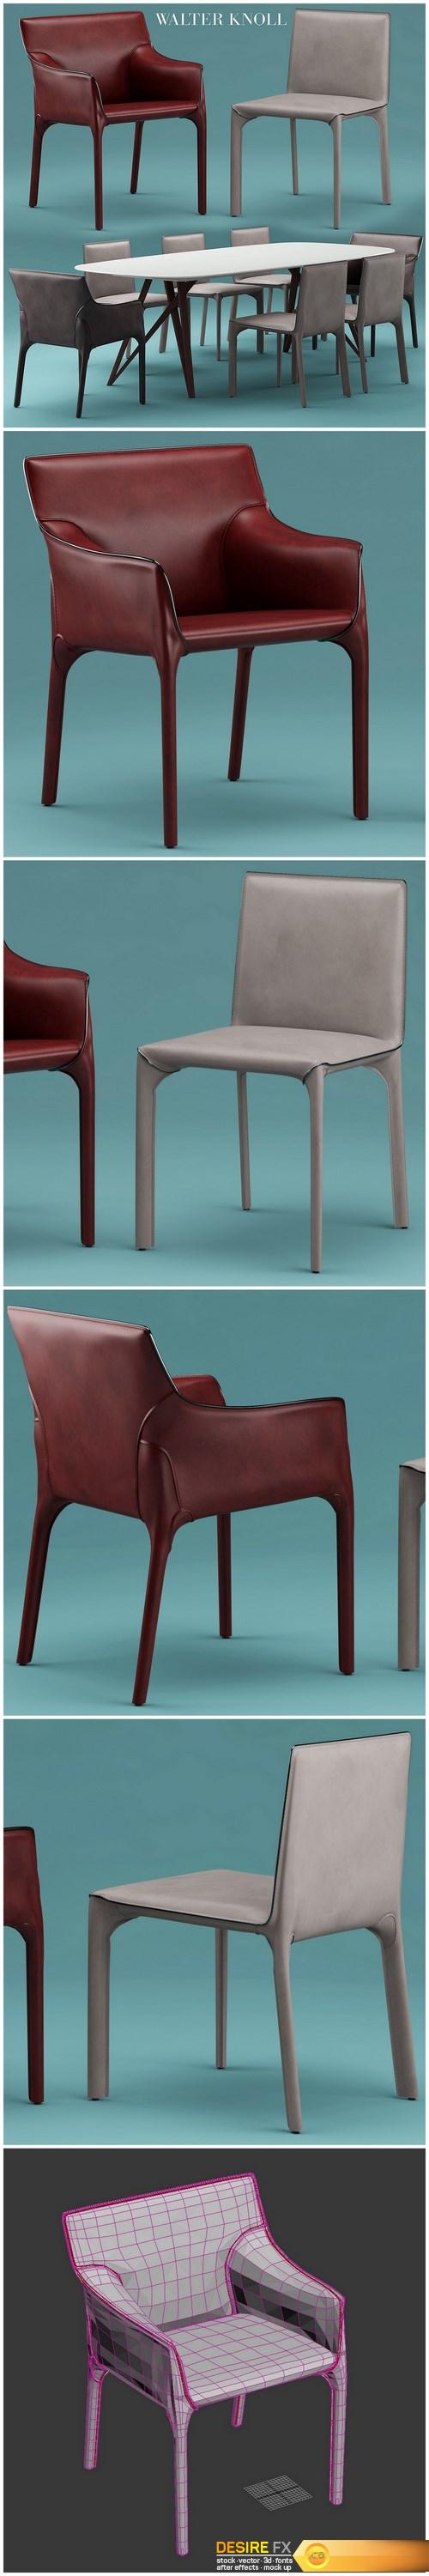 walterknoll Saddle Chair 3d Model